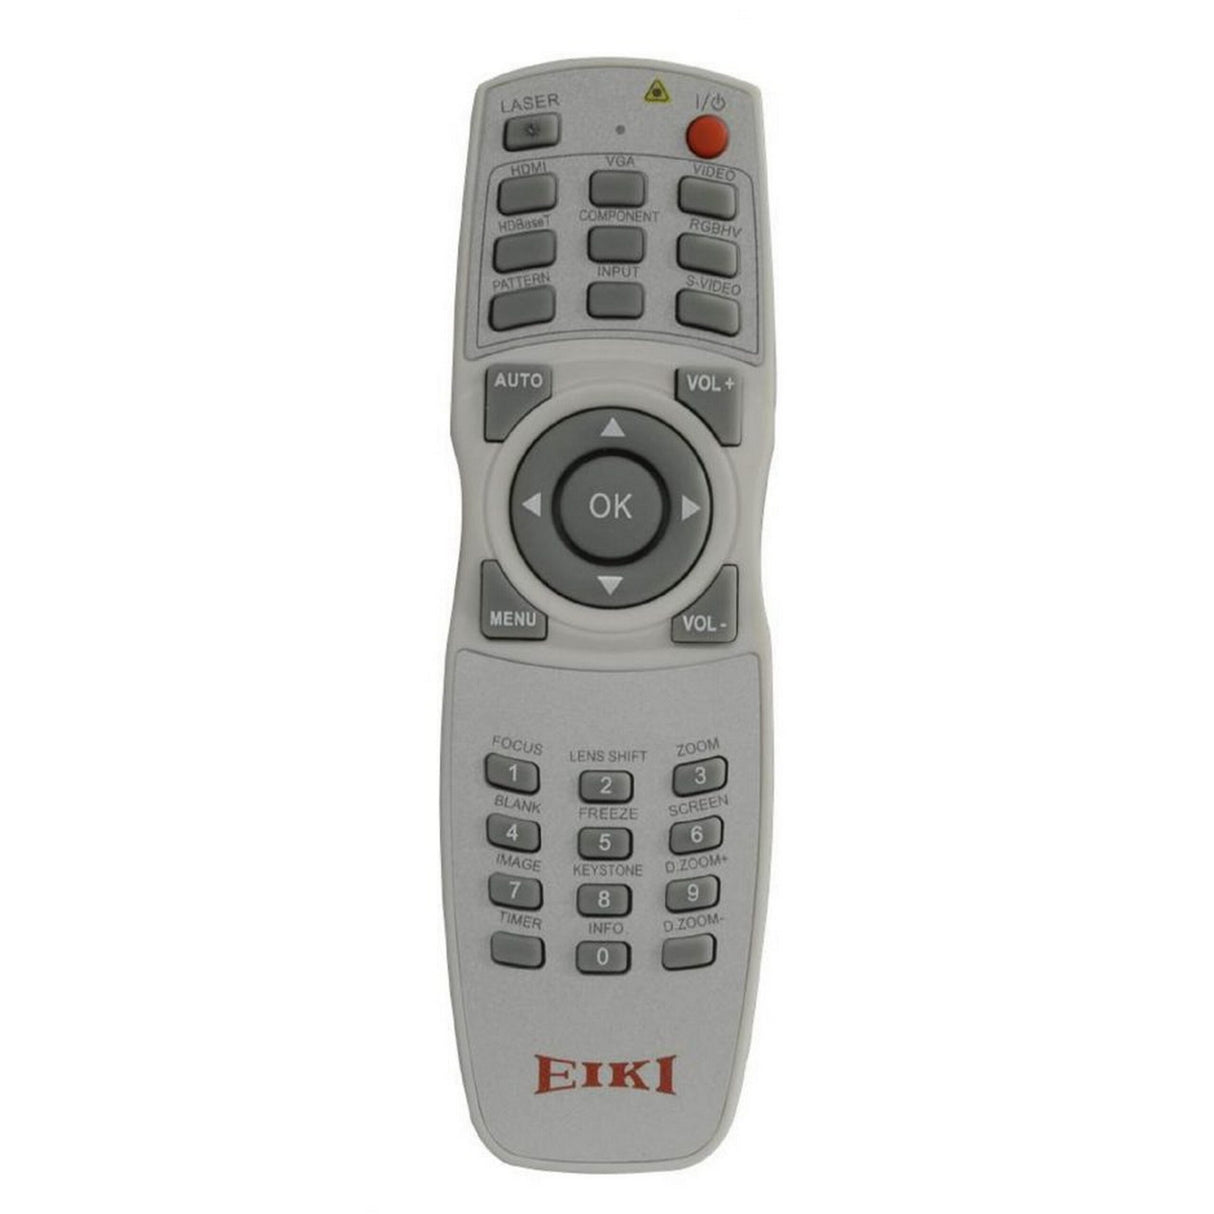 Eiki 63910023 Infrared and Wired Remote with Laser Pointer for EK-510U/L, EK-511/L, EK-512X/L